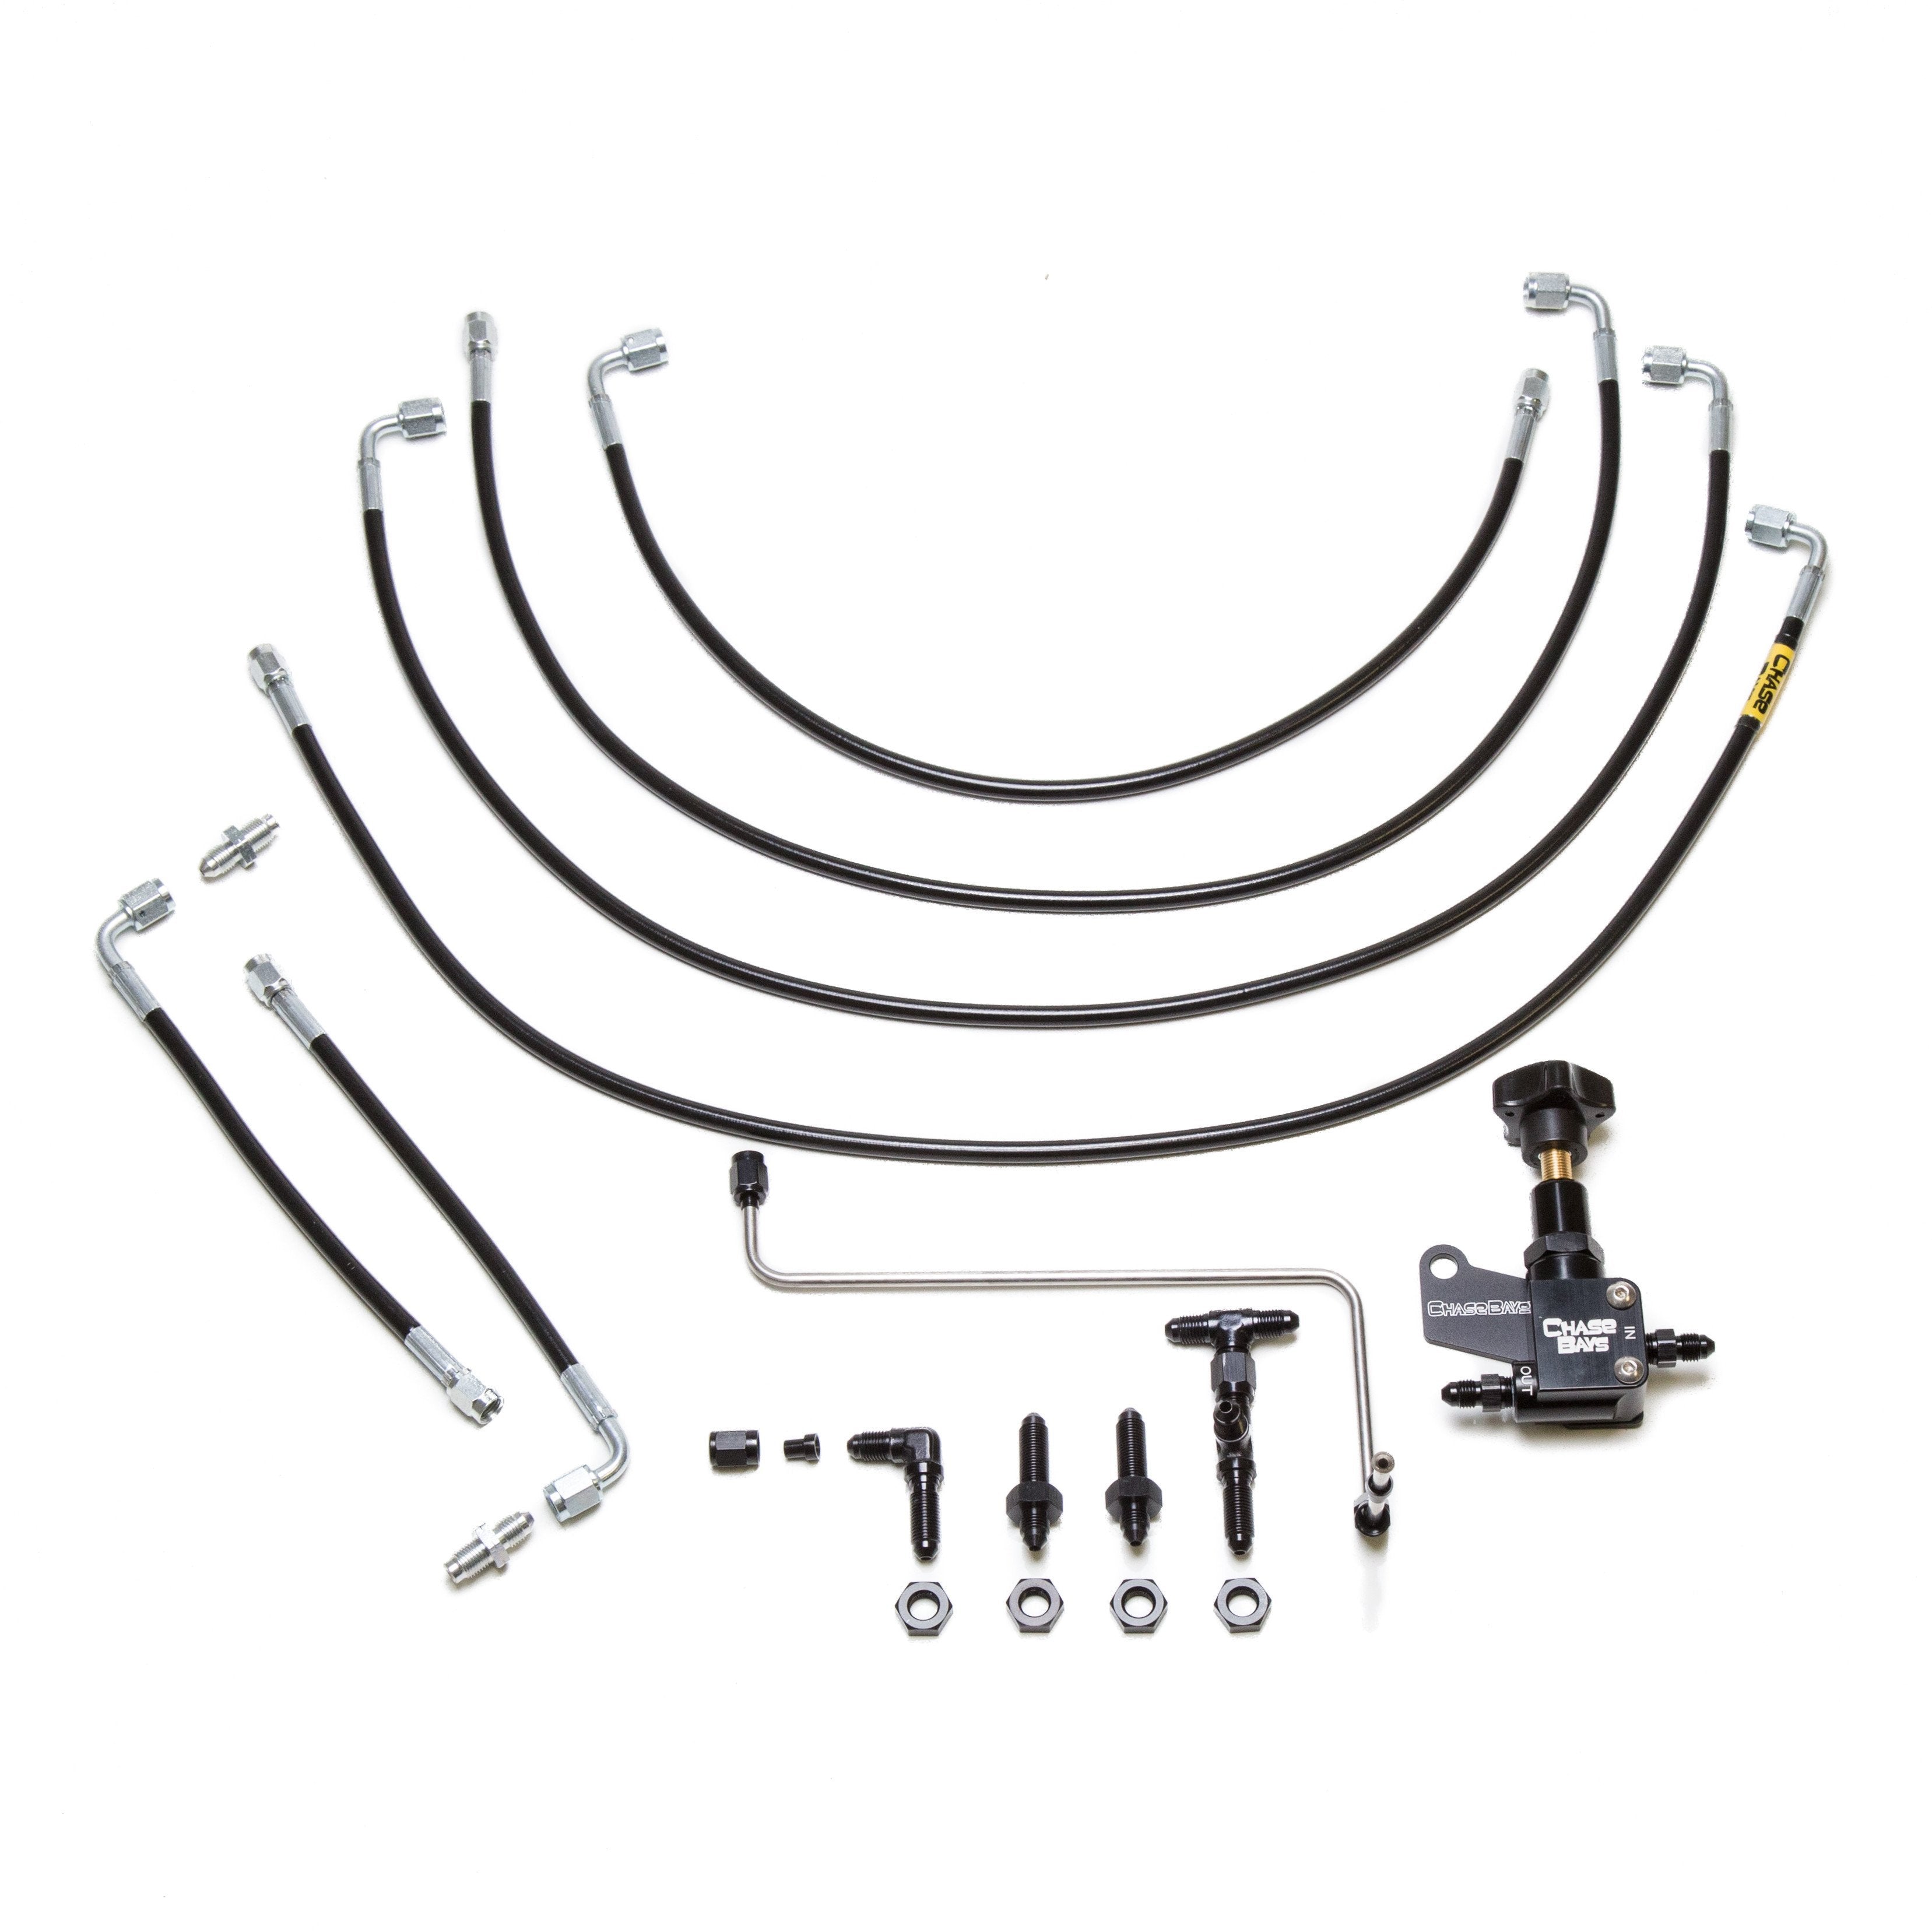 CHASE BAYS Nissan Silvia S13 S14 S15 Bremsleitung Relocation Kit für Brake Booster Eliminator - PARTS33 GmbH